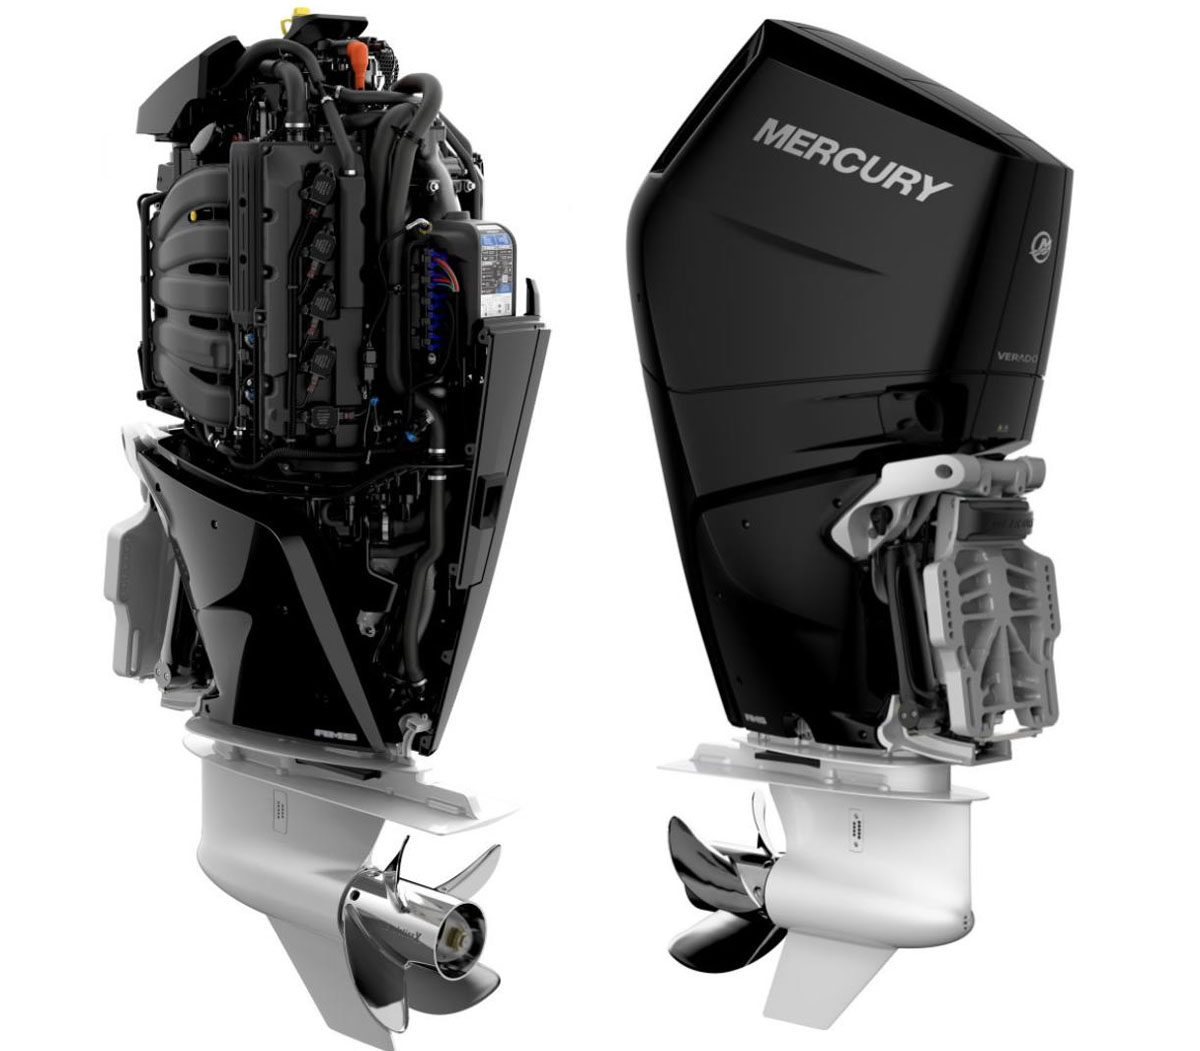 Mercury Introduces a V10 5.7 L Outboard